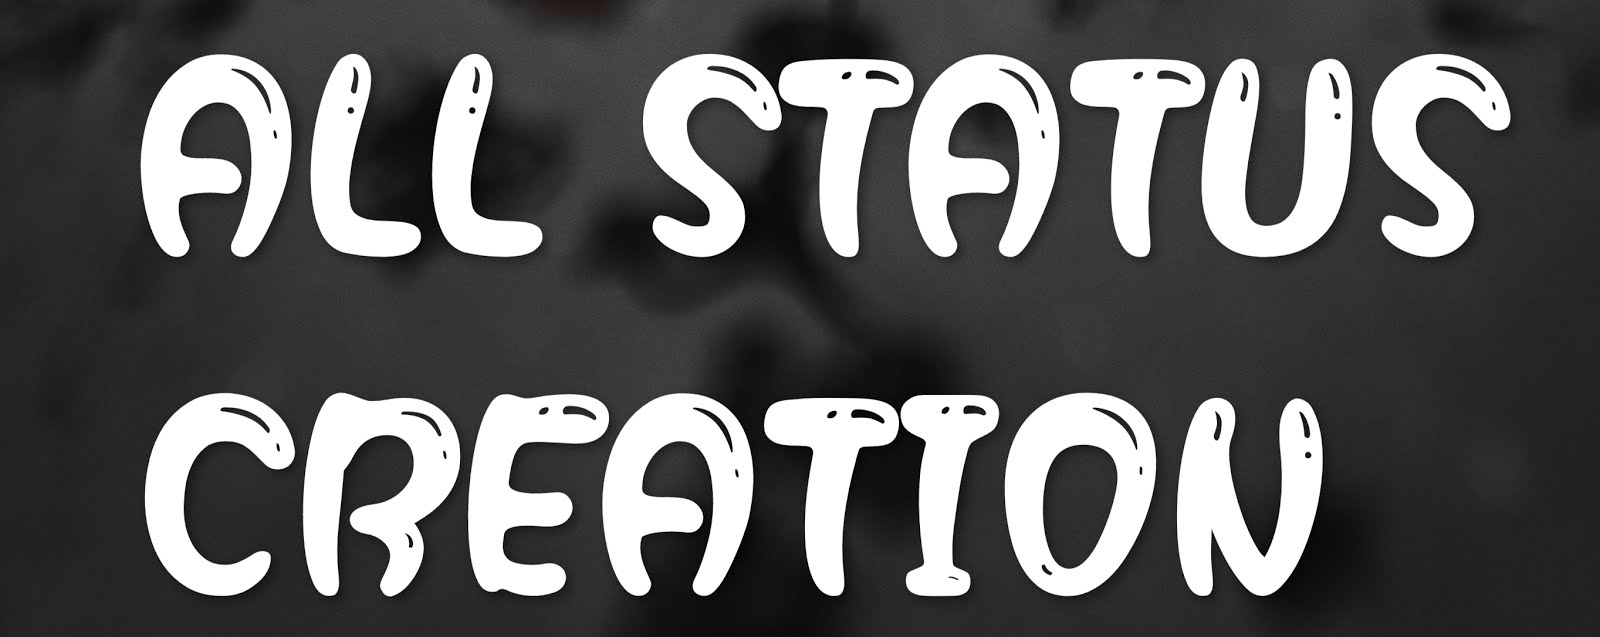 All status creation 